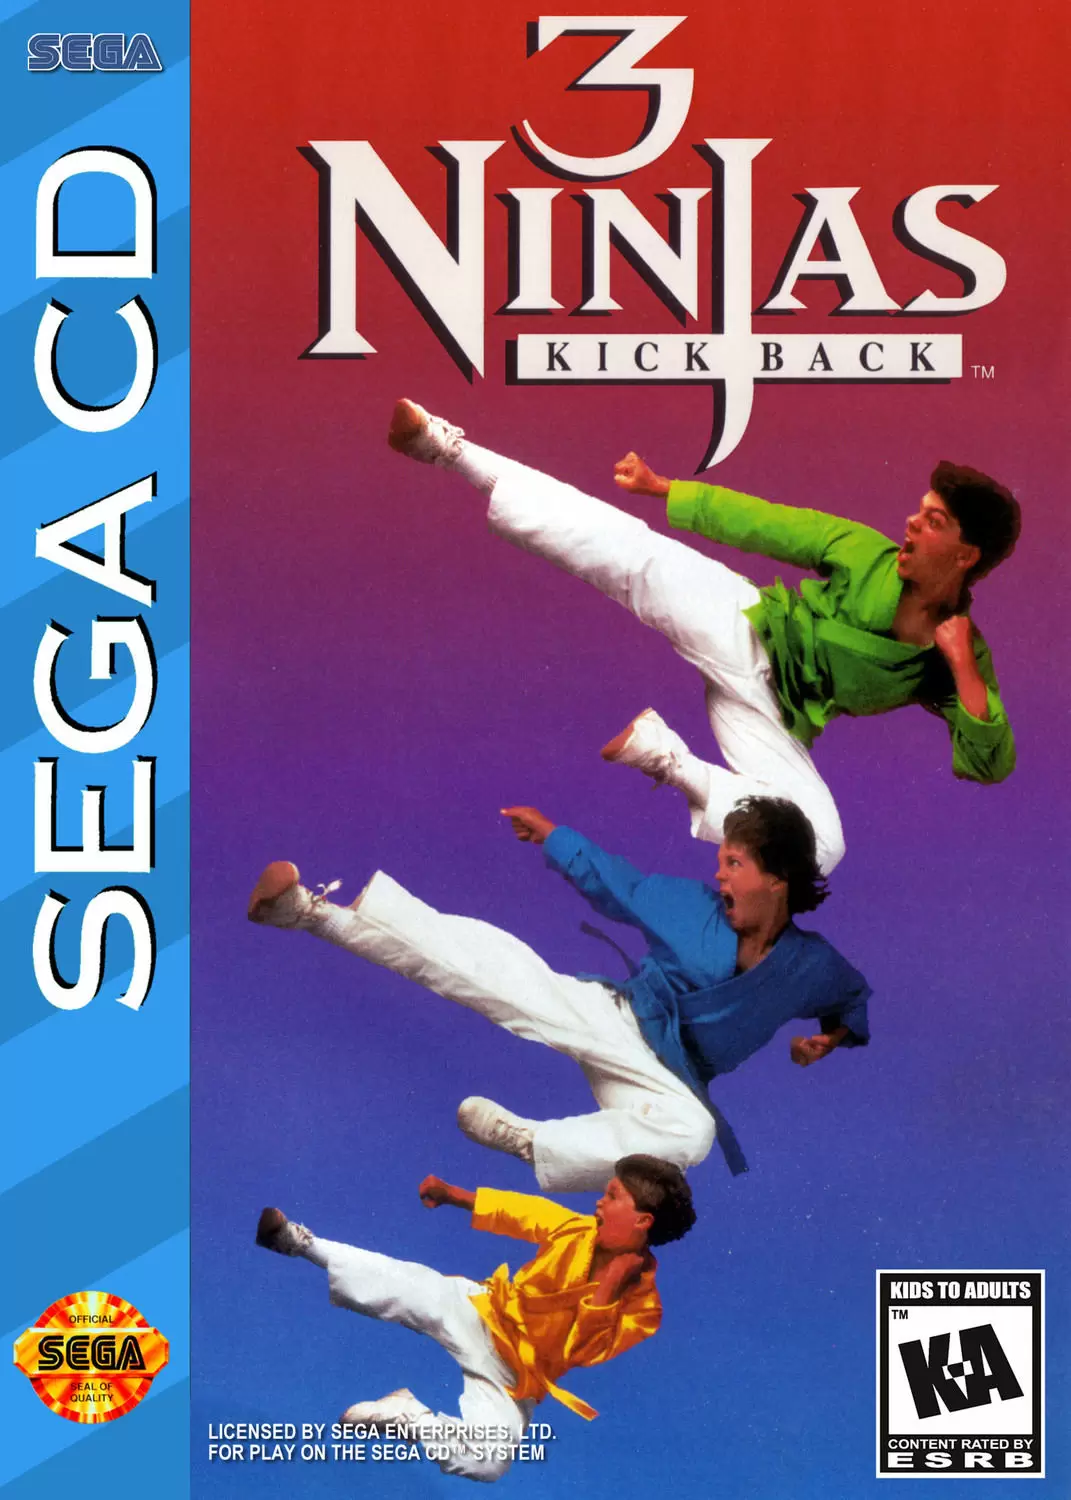 SEGA Mega CD Games - 3 Ninjas Kick Back